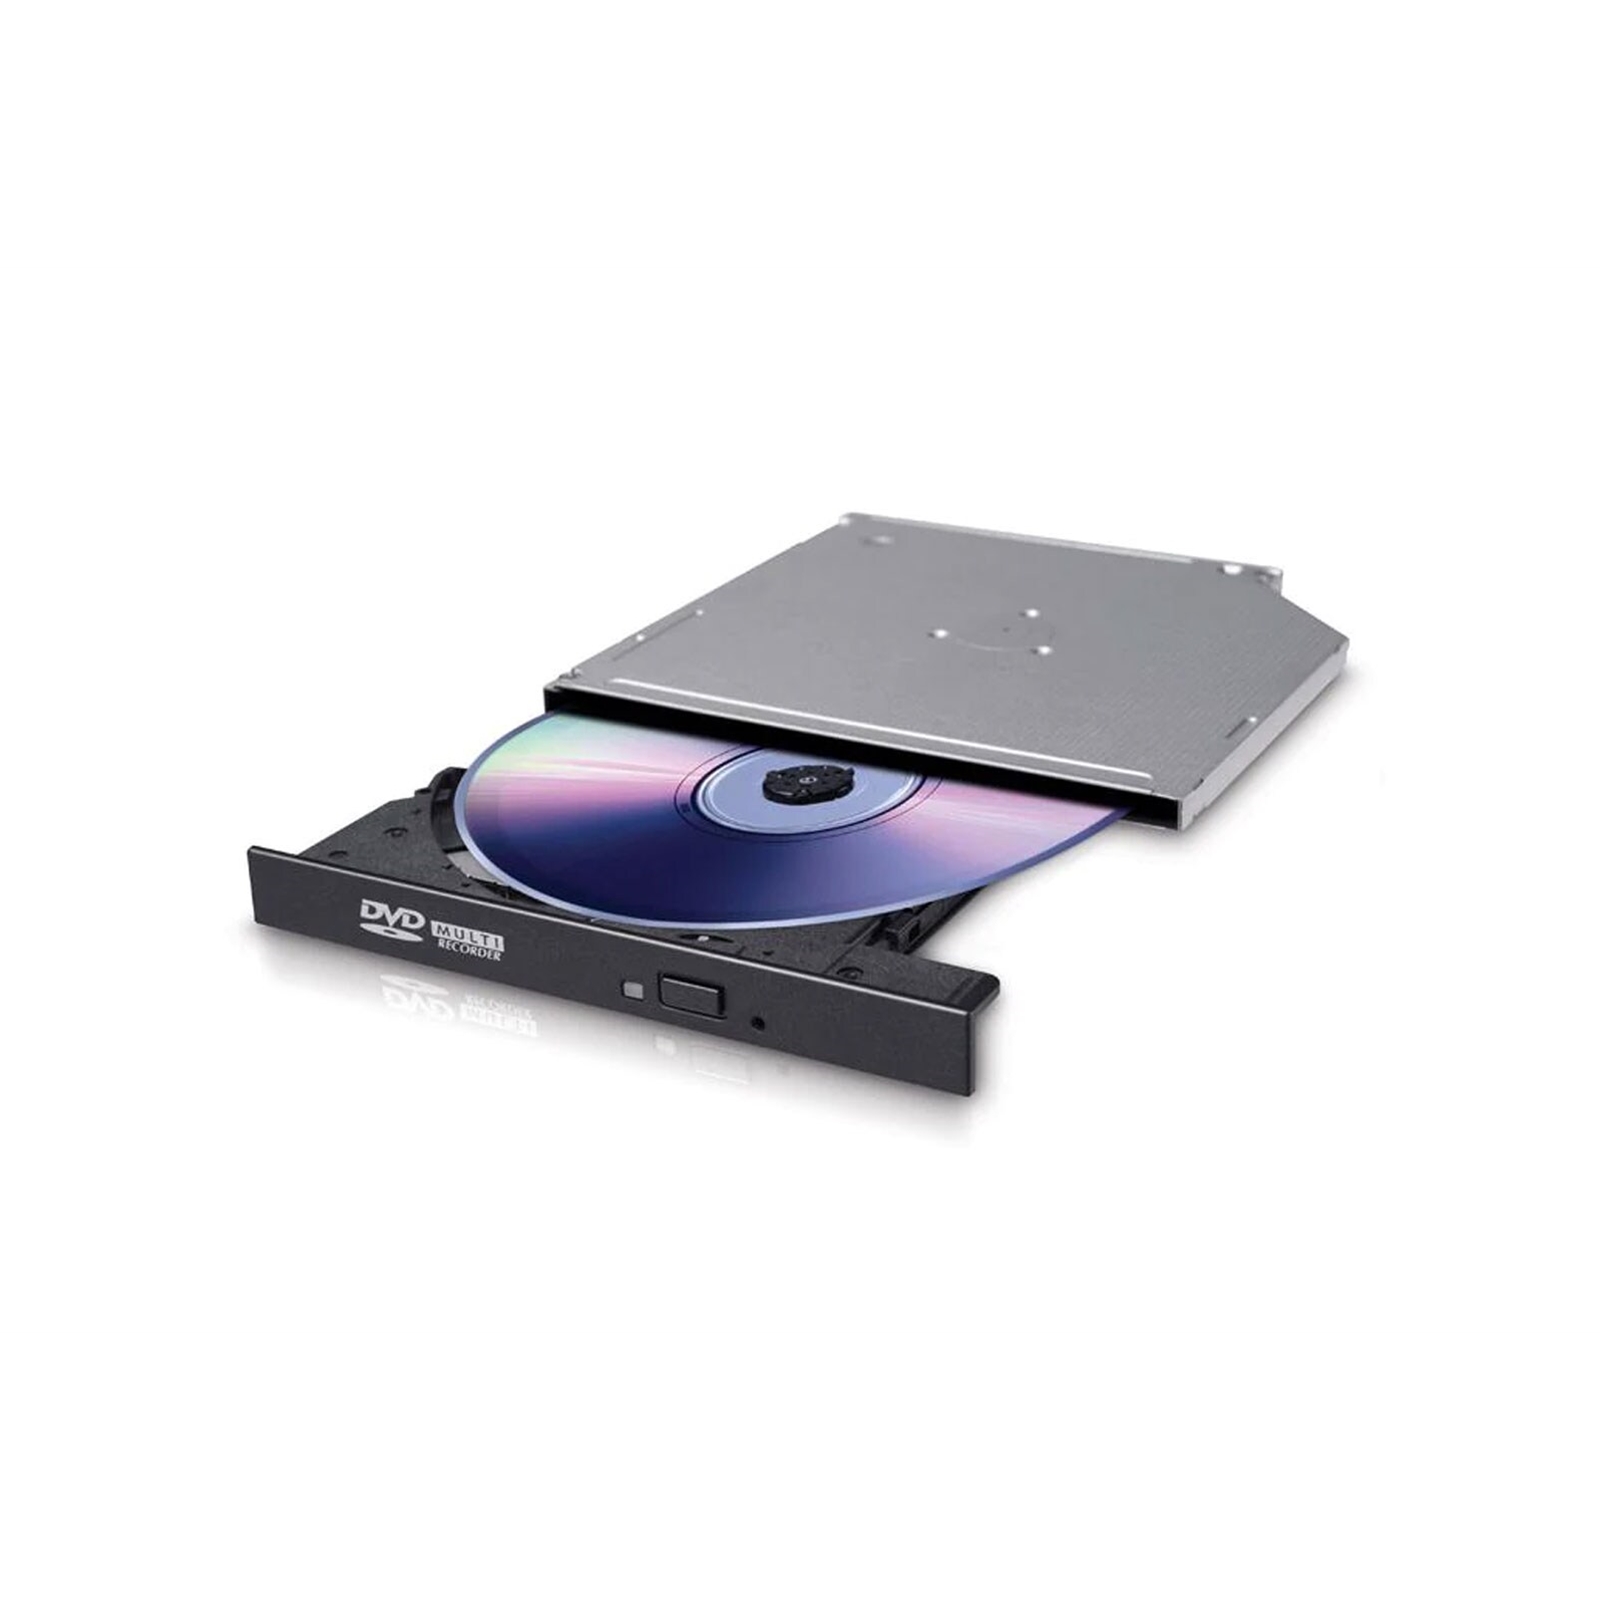 Hitachi-LG GTC2N 6x DVD-RW Internal OEM Slimline Optical Drive (12.7mm)